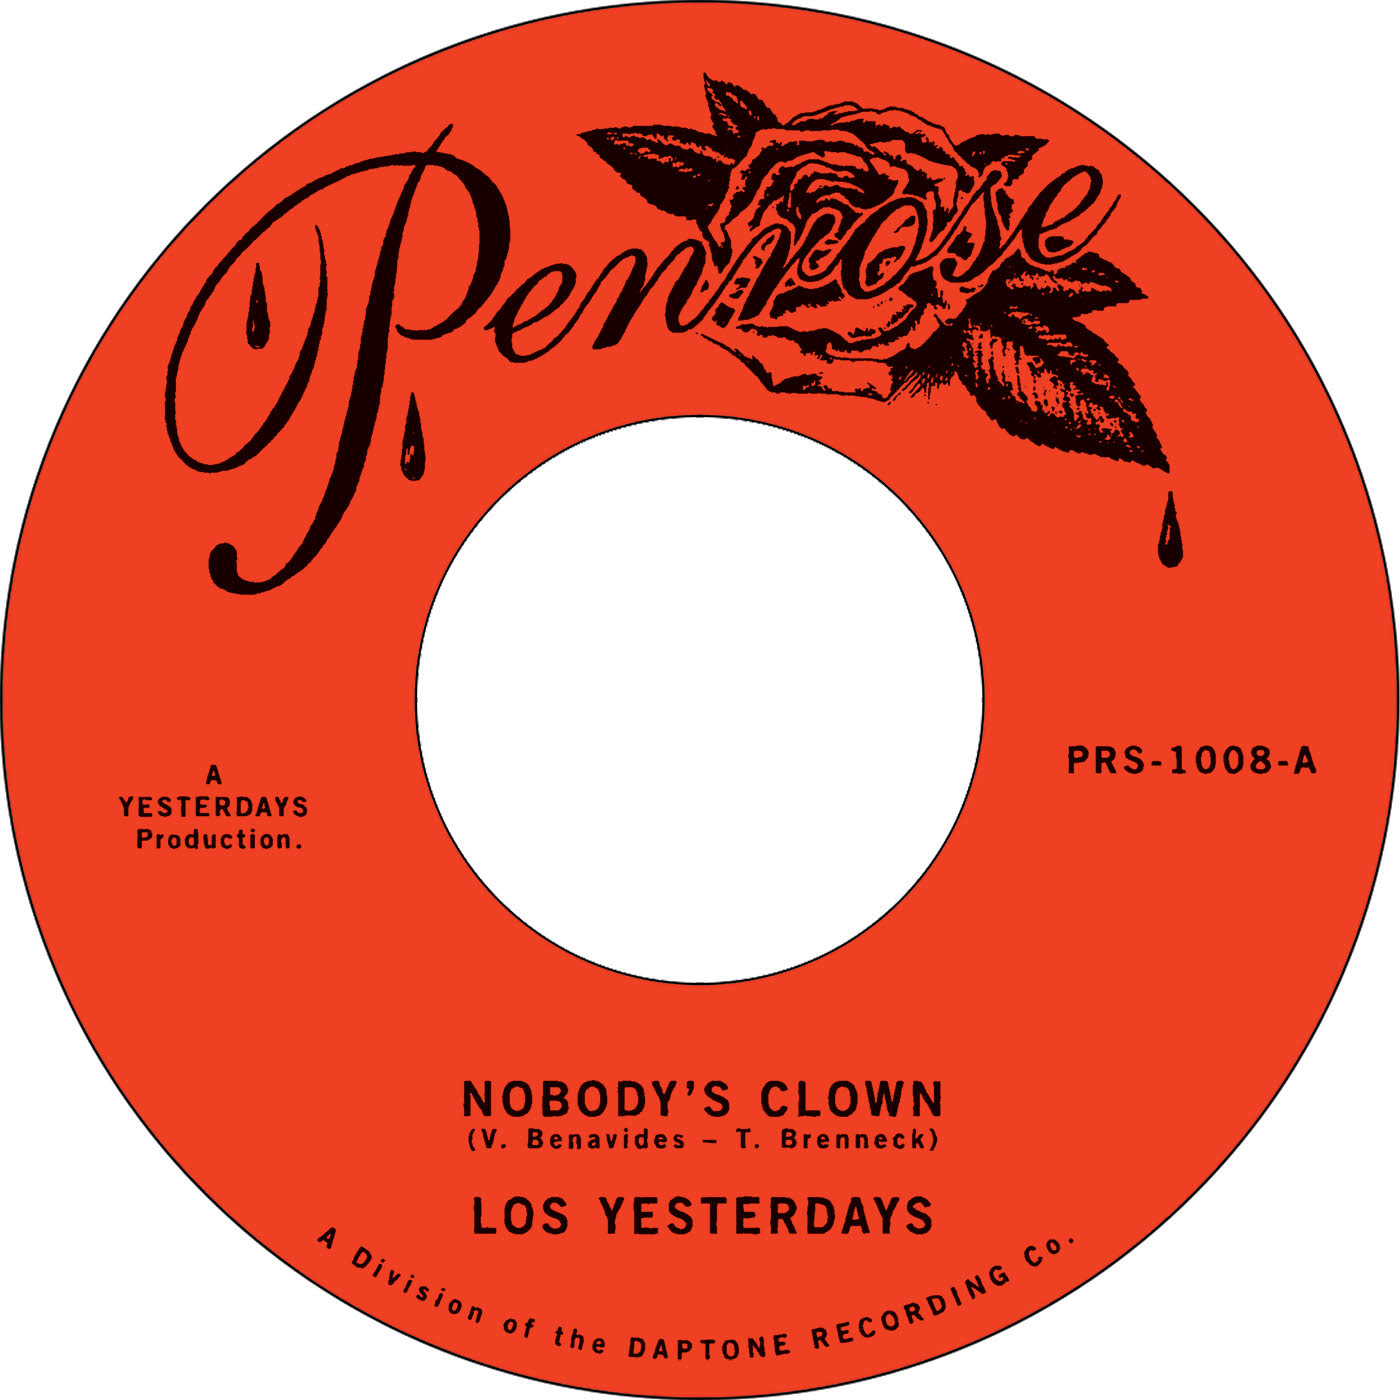 Los Yesterdays "Nobody's Clown" 45